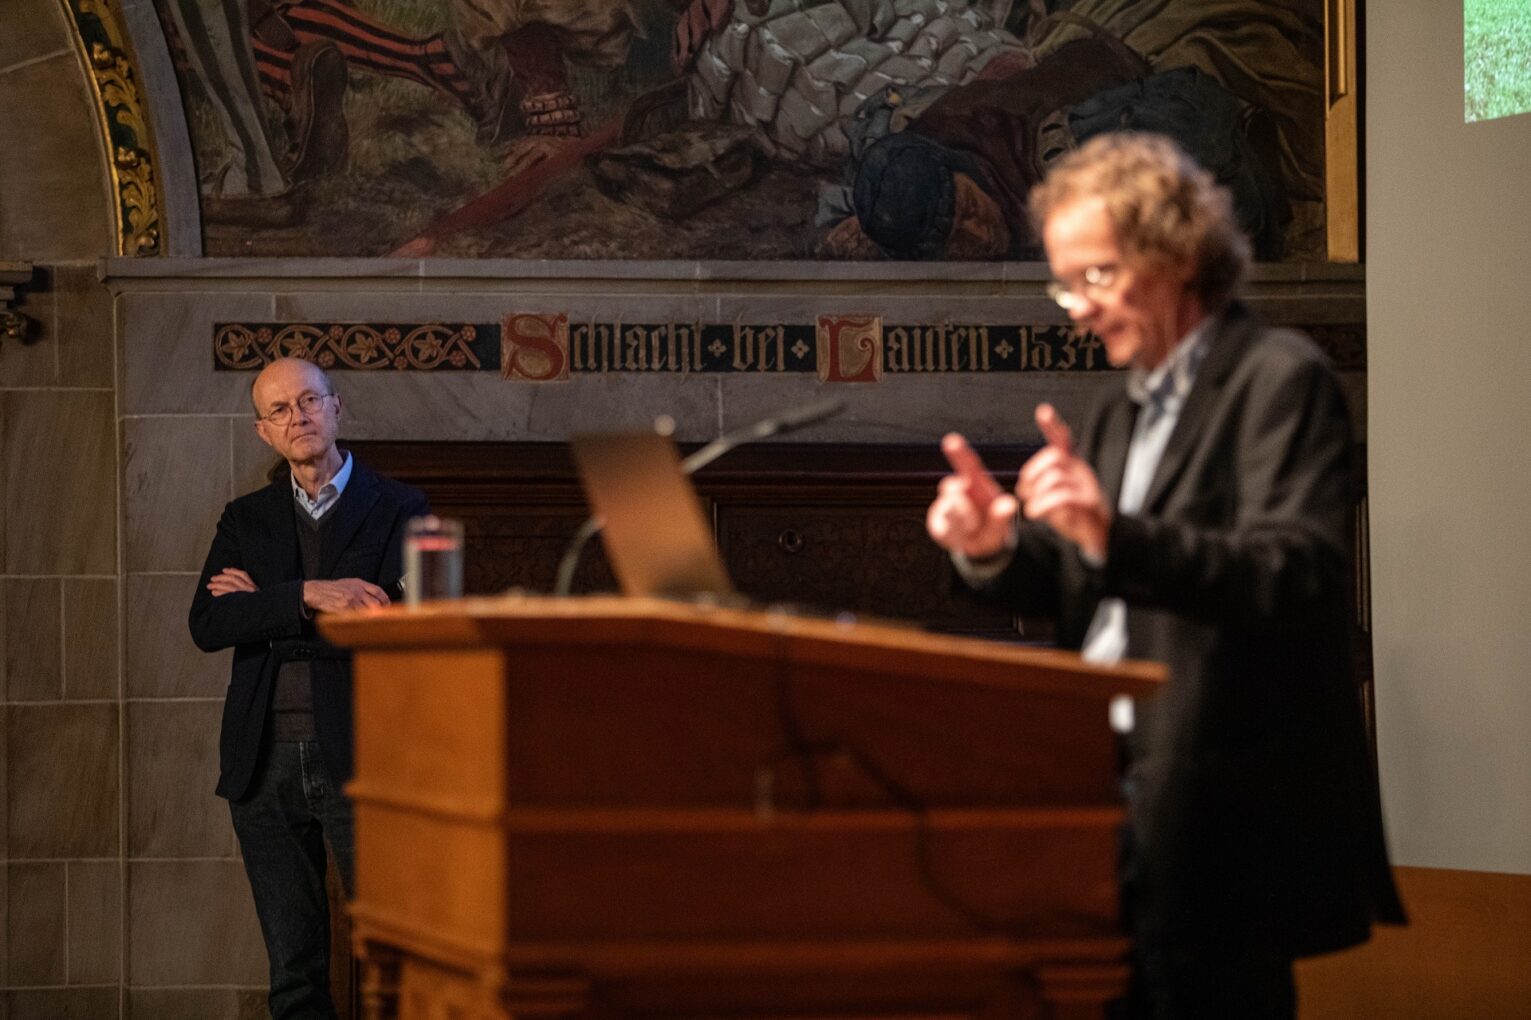 Tagung in Marburg, Prof. Dr. Jörg Stabenow, Dr. Gerd Strickhausen